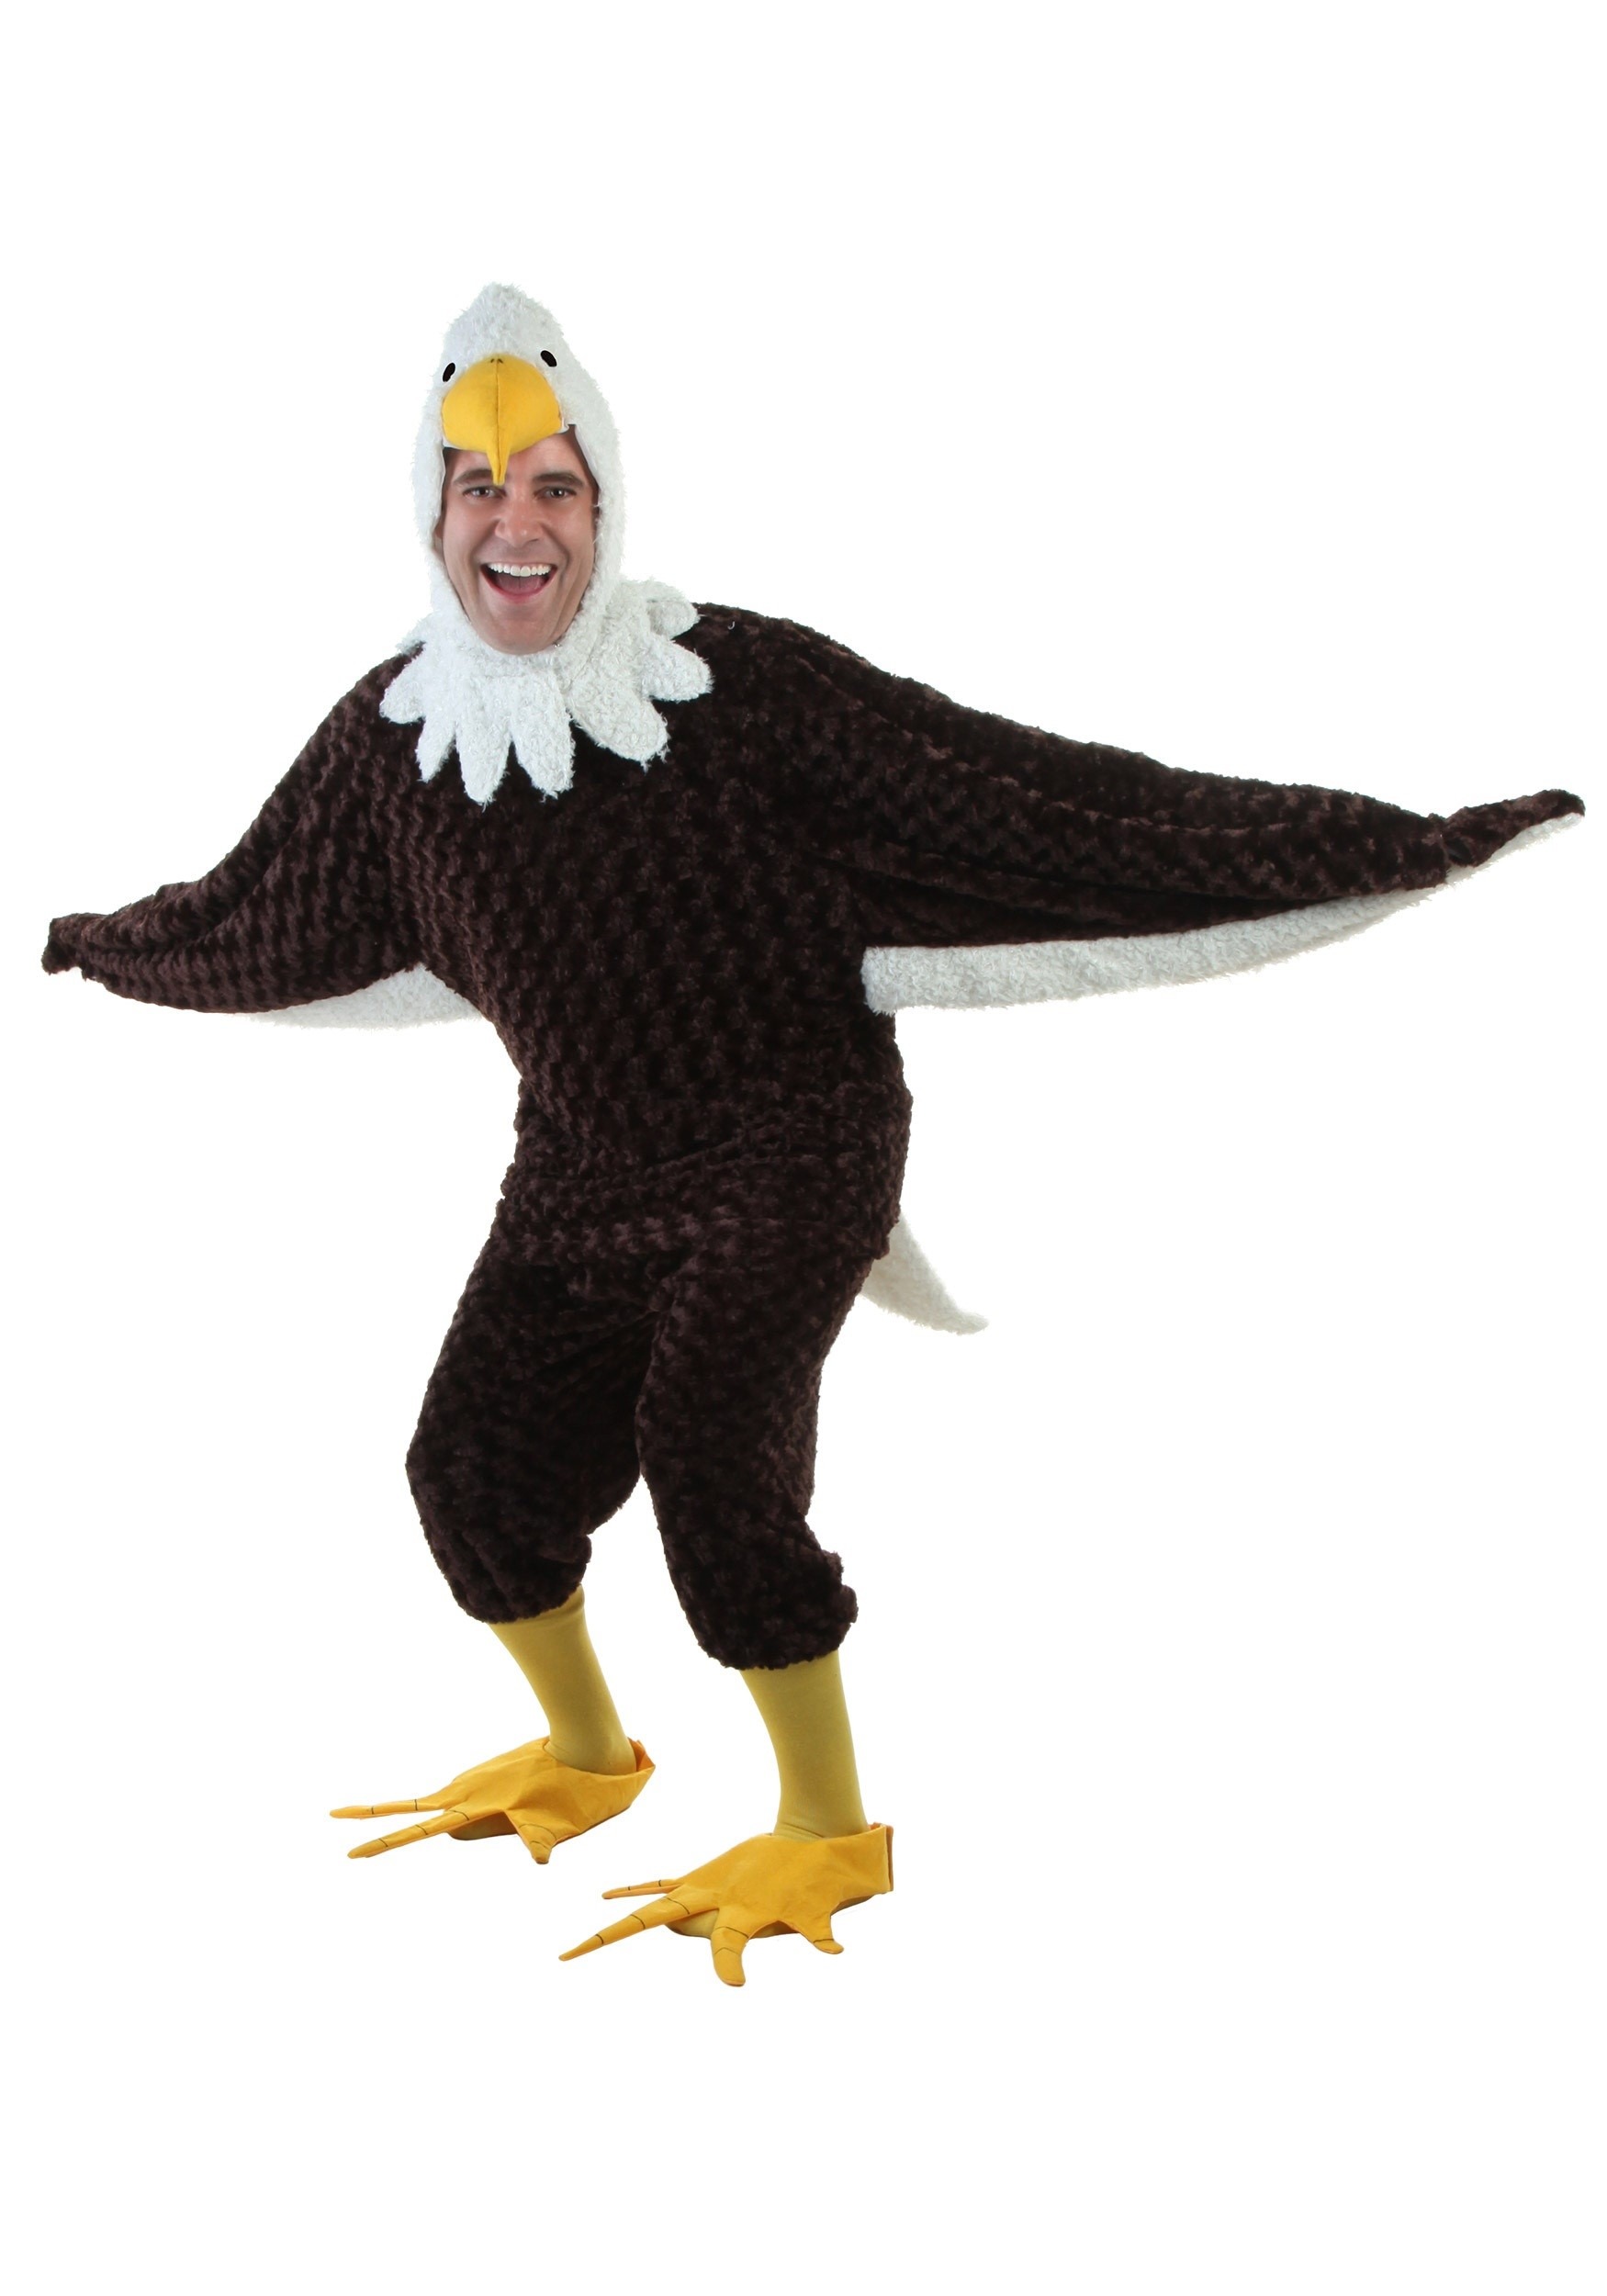 DIY Bald Eagle Costume  Eagle costume, Halloween costume contest